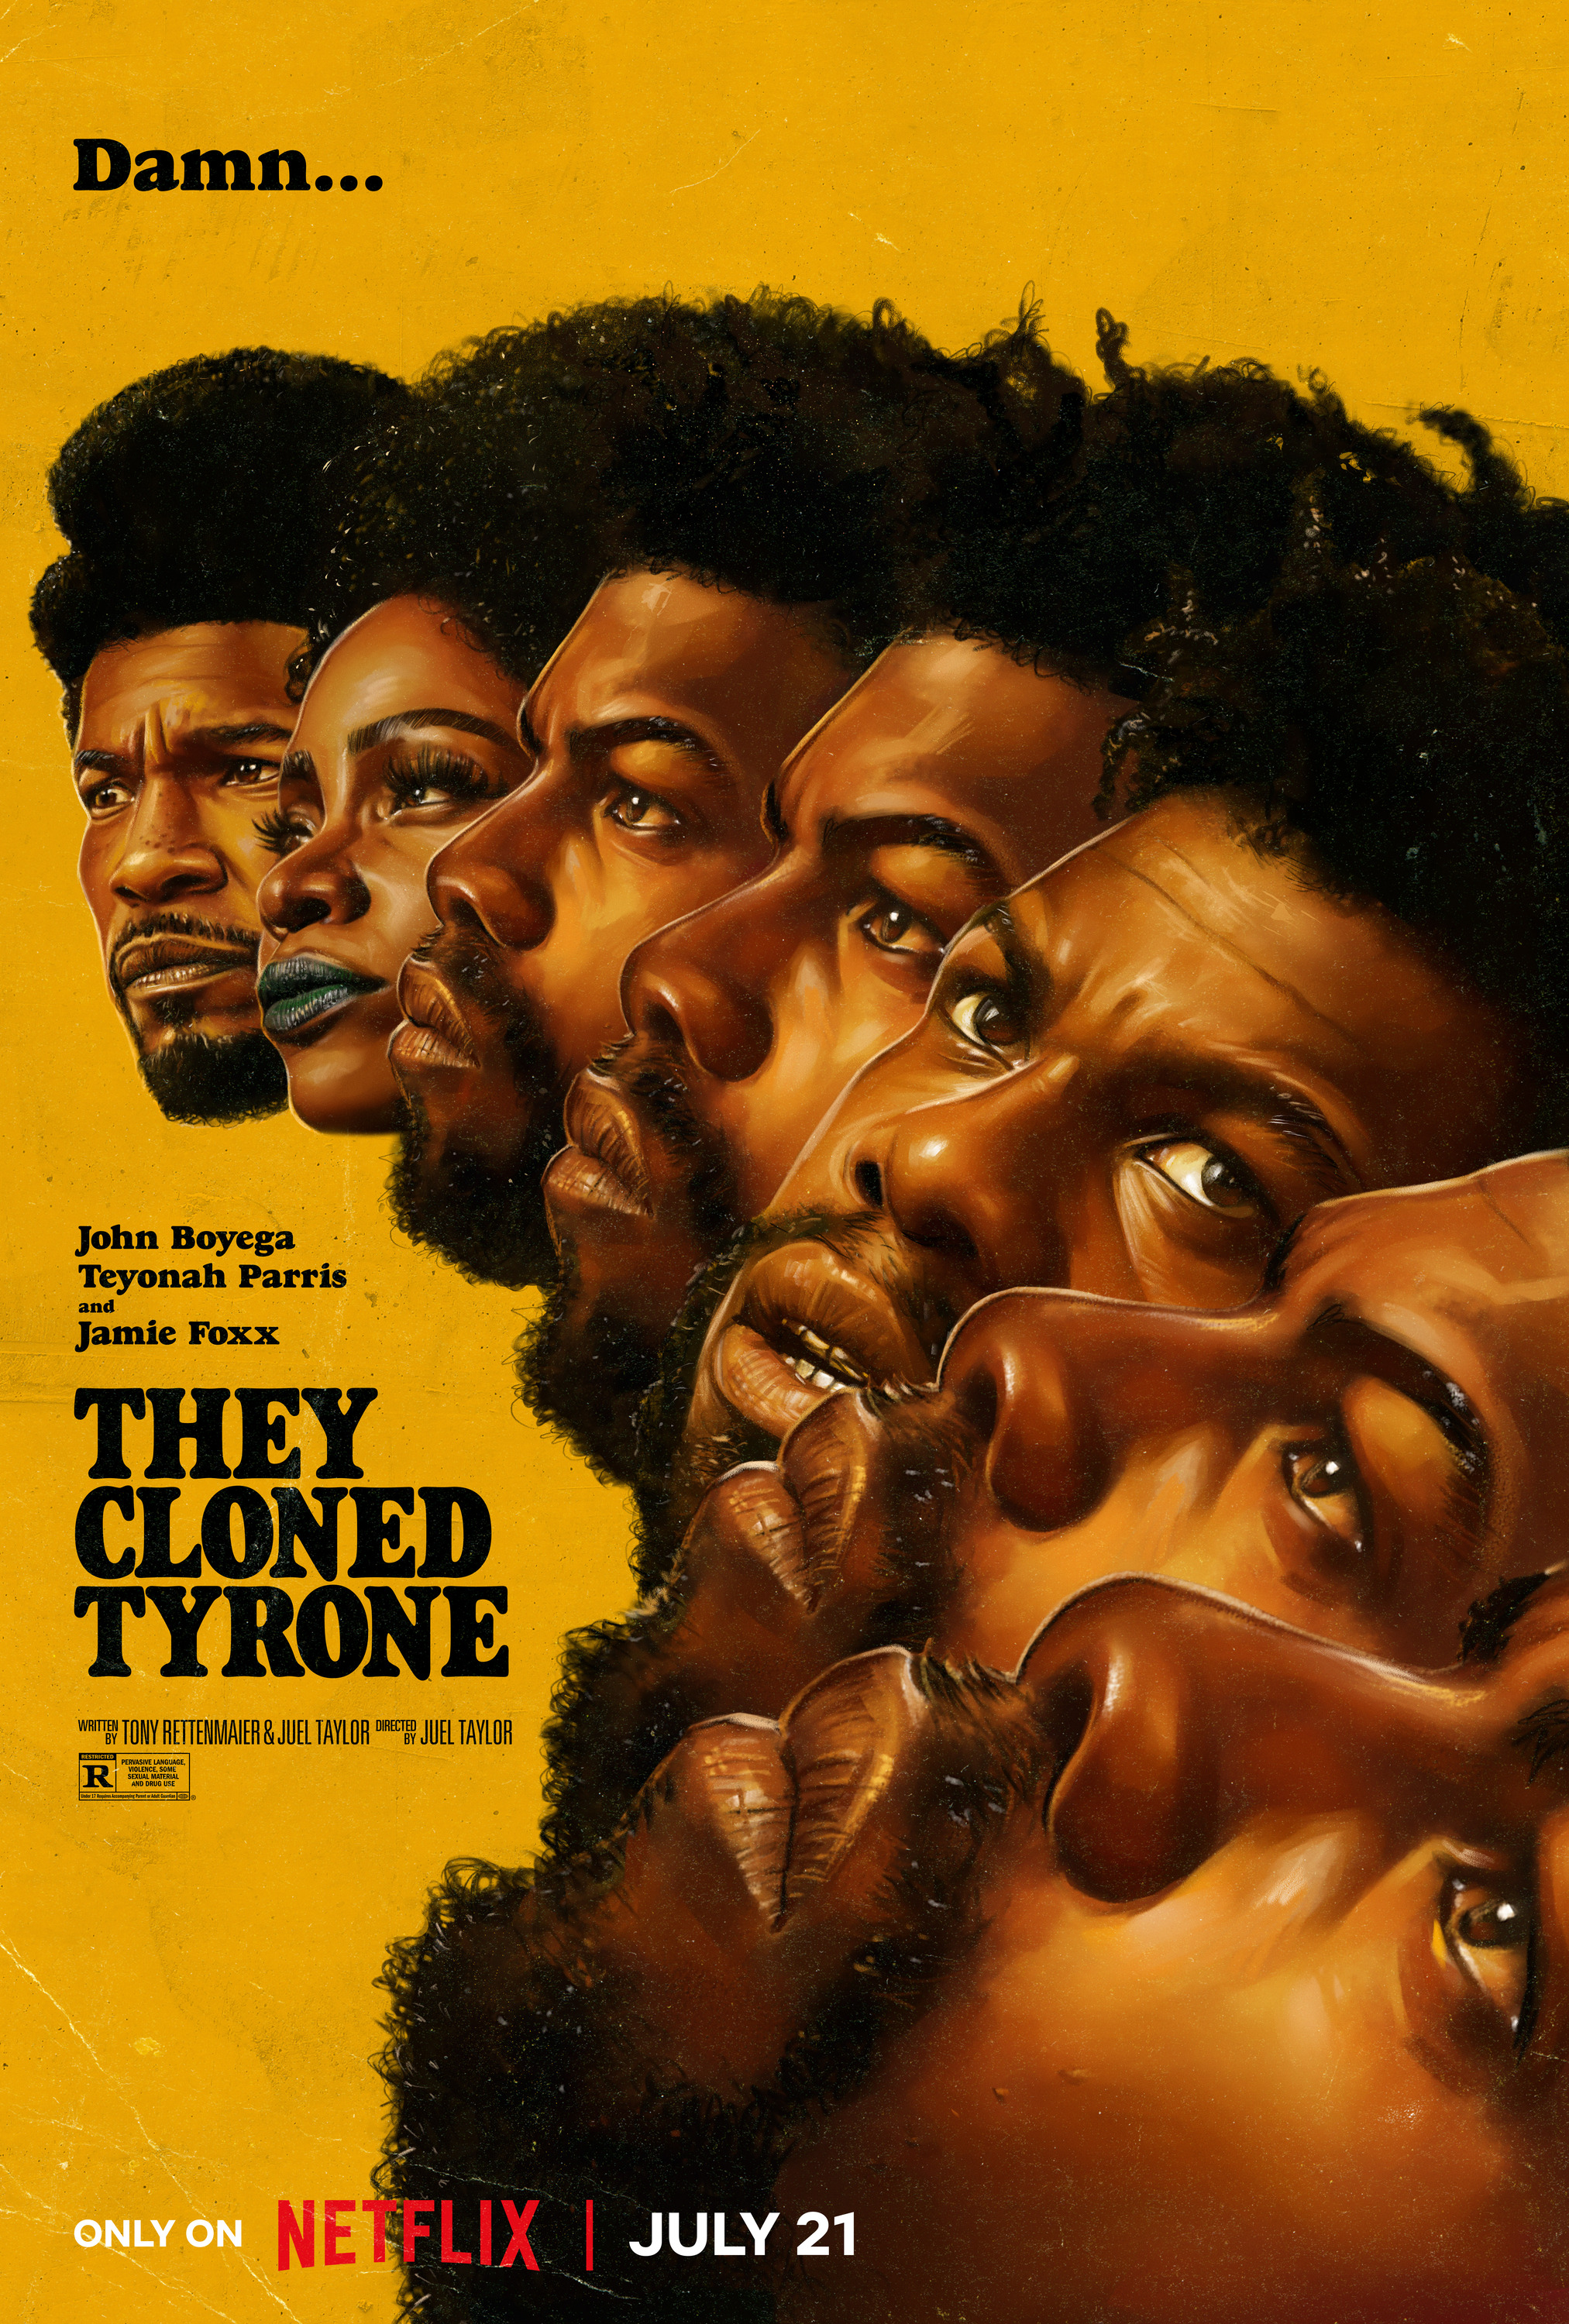 They Cloned Tyrone sci-fi movies on Netflix